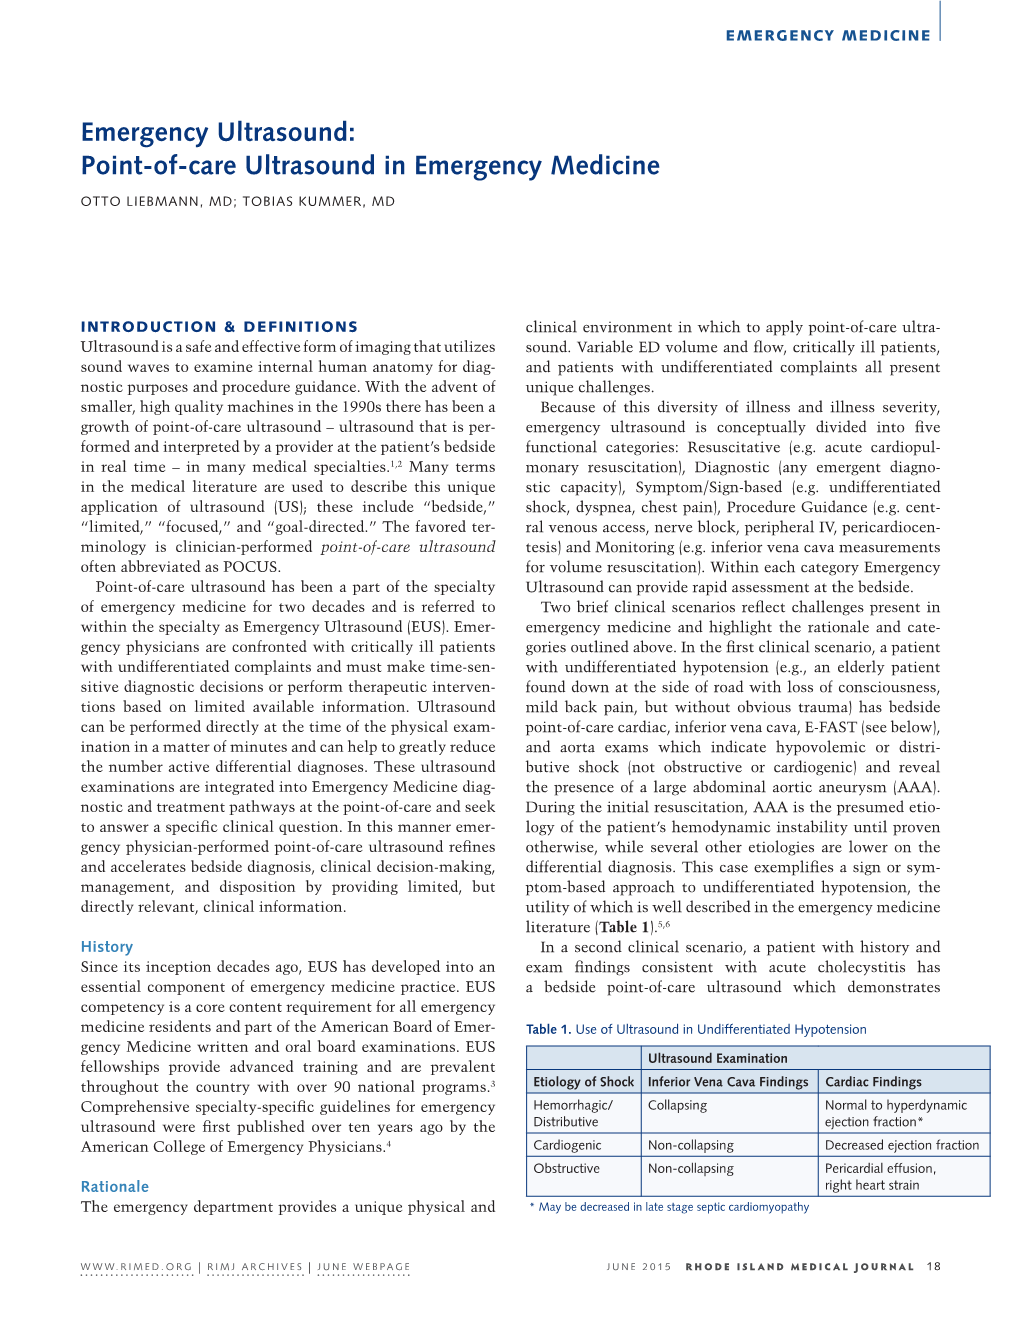 Emergency Ultrasound: Point-Of-Care Ultrasound in Emergency Medicine